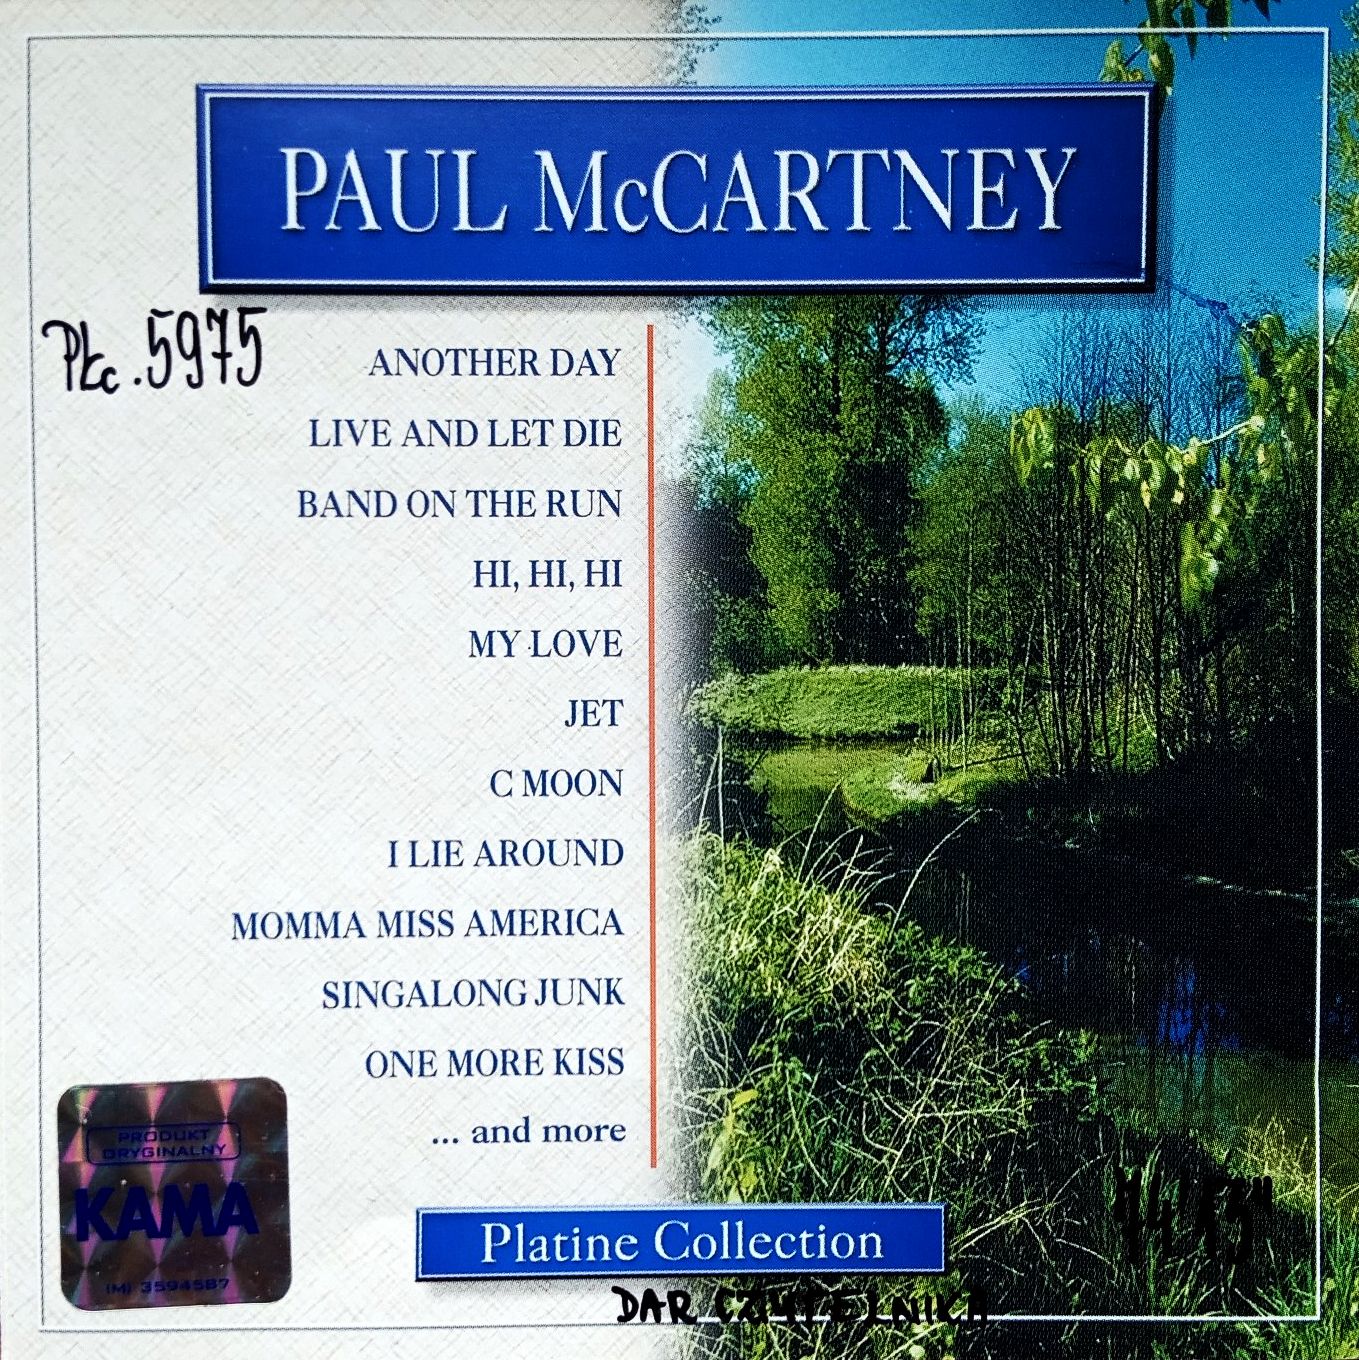 McCARTNEY PAUL - Platine Collection